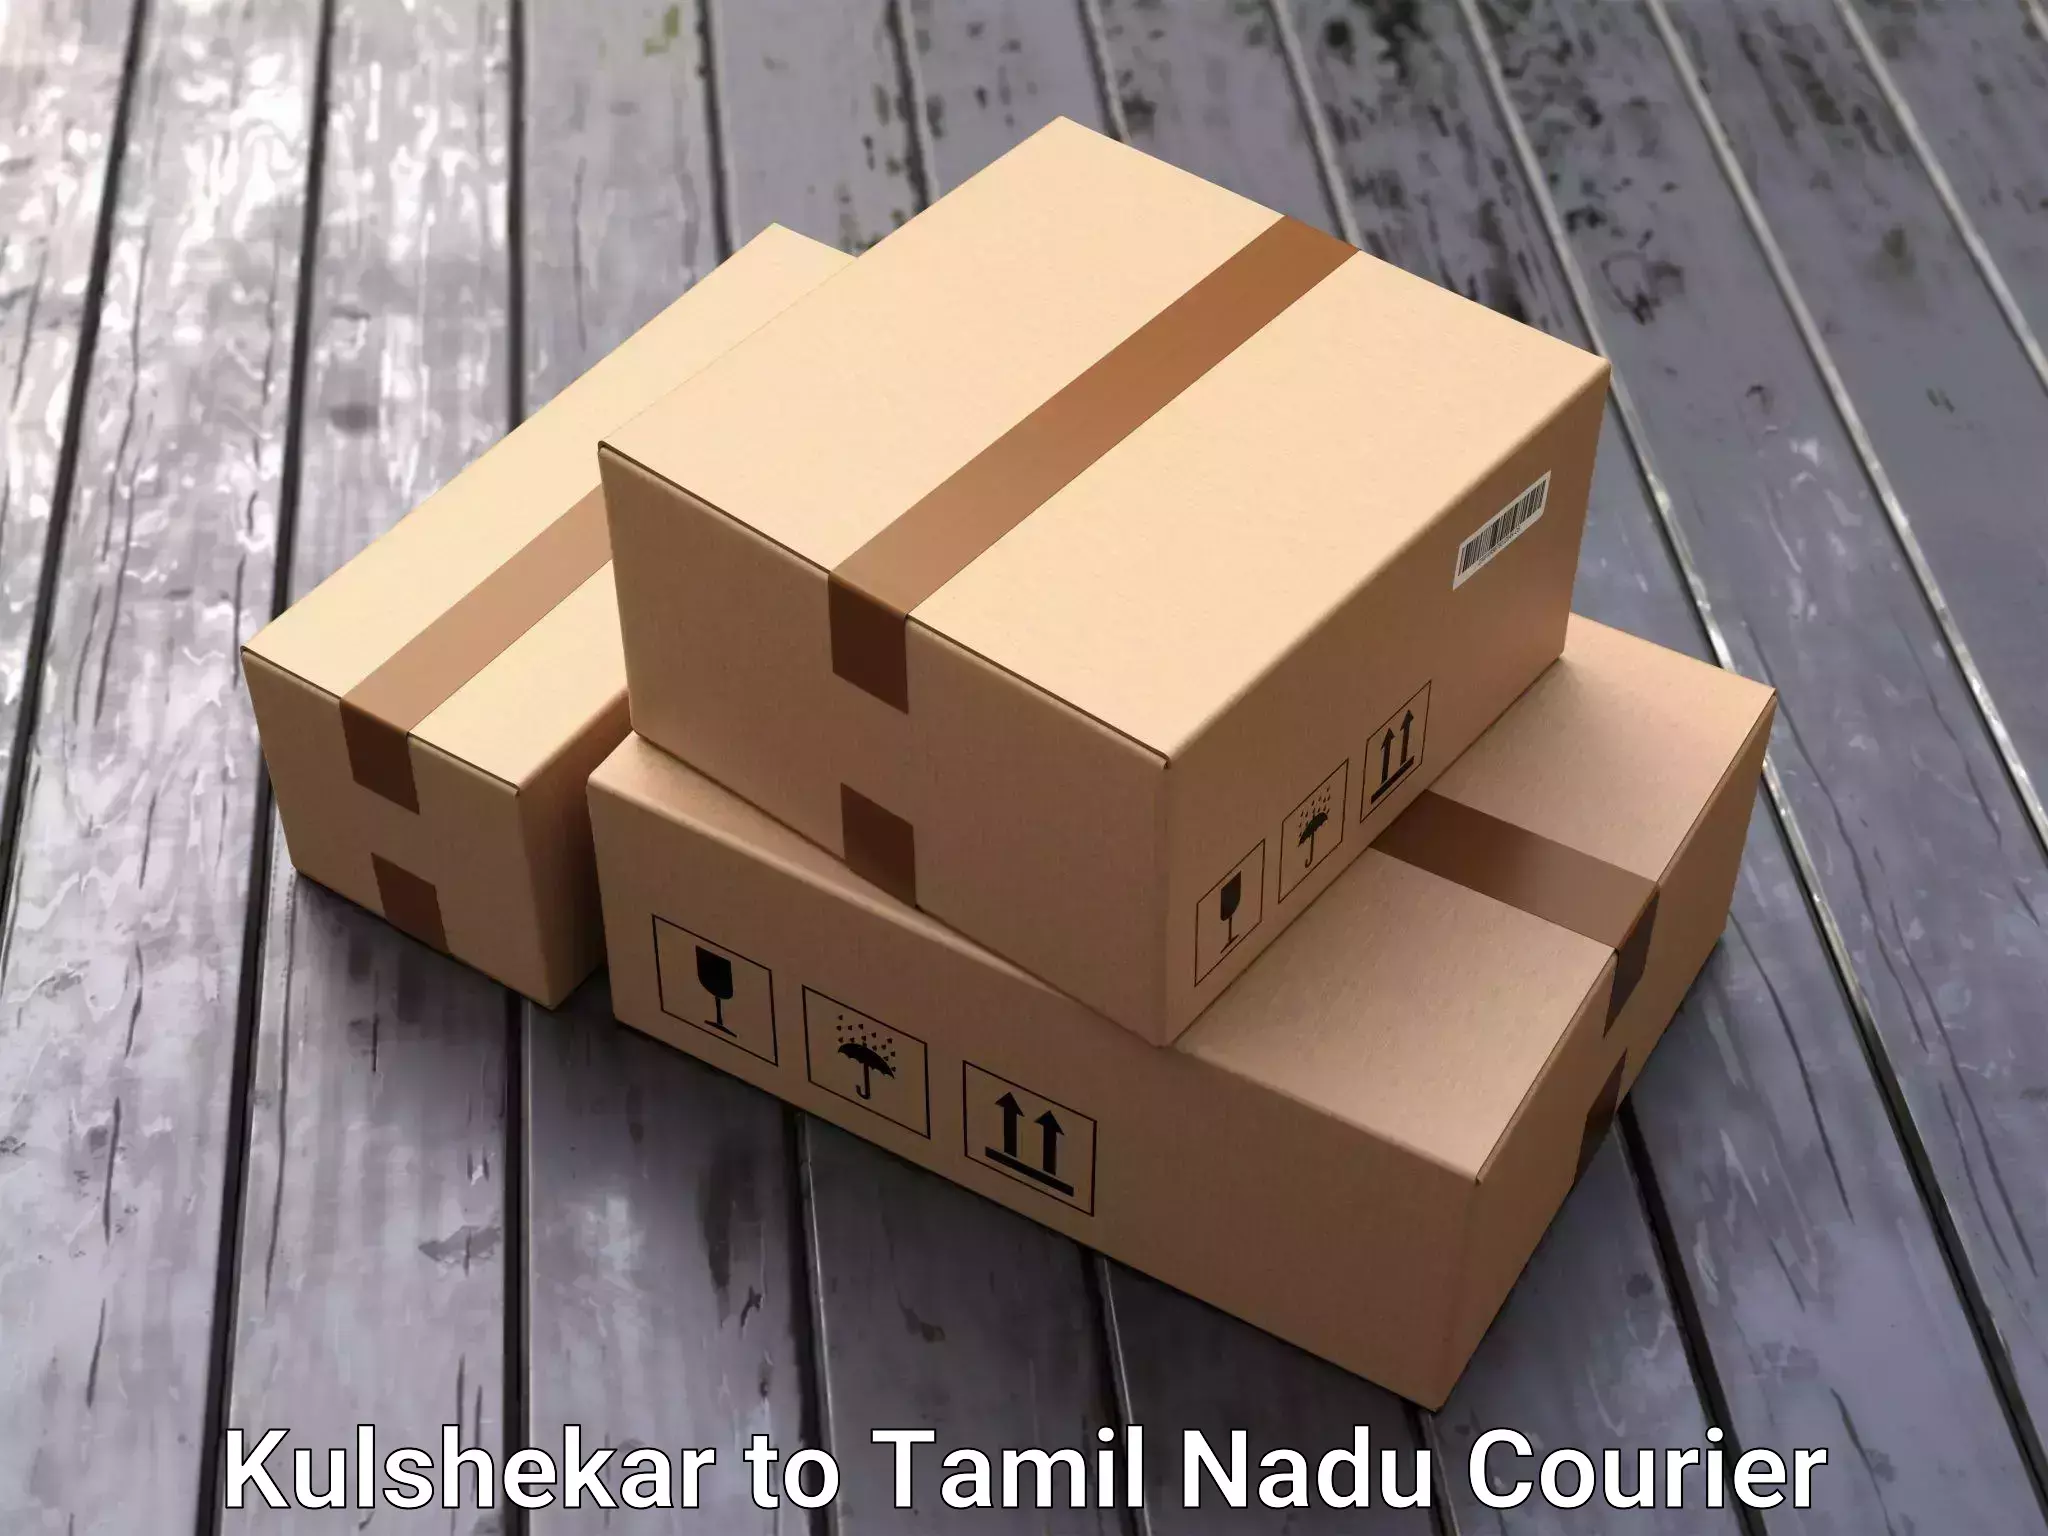 Trusted home movers Kulshekar to Chennai